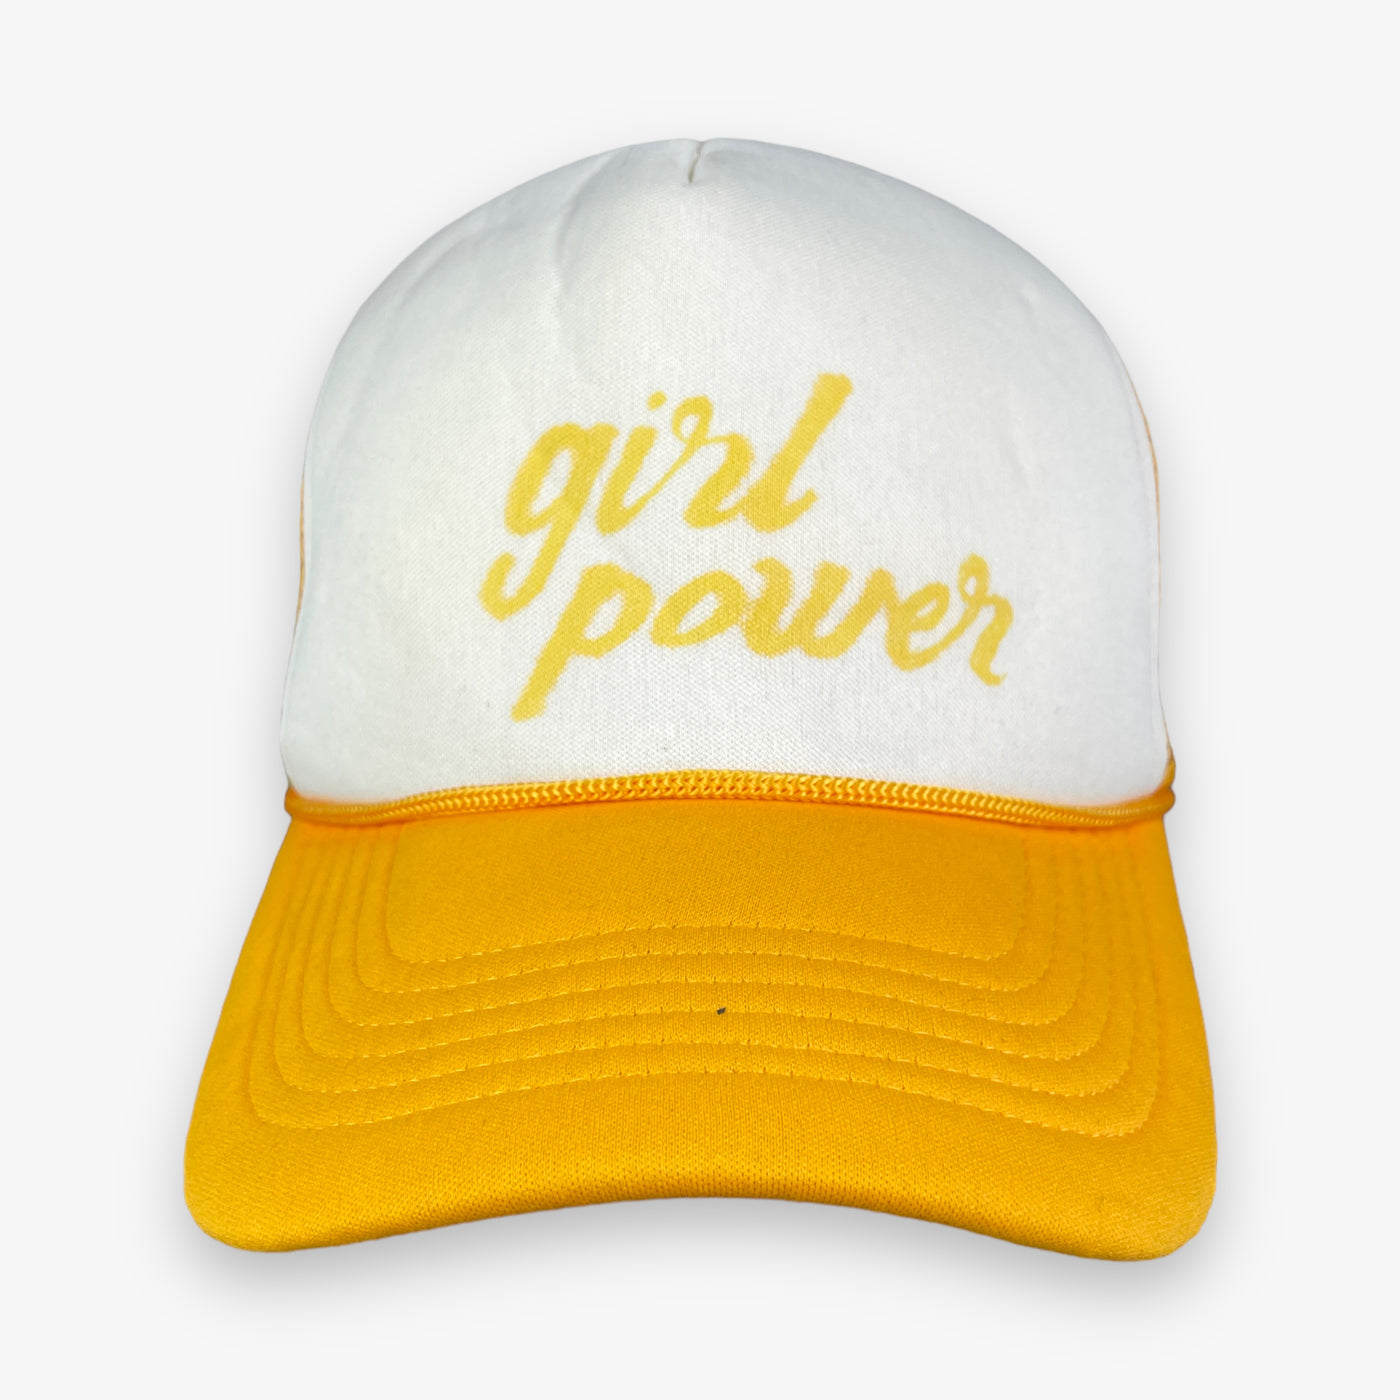 EARLY 90S GIRL POWER CAP